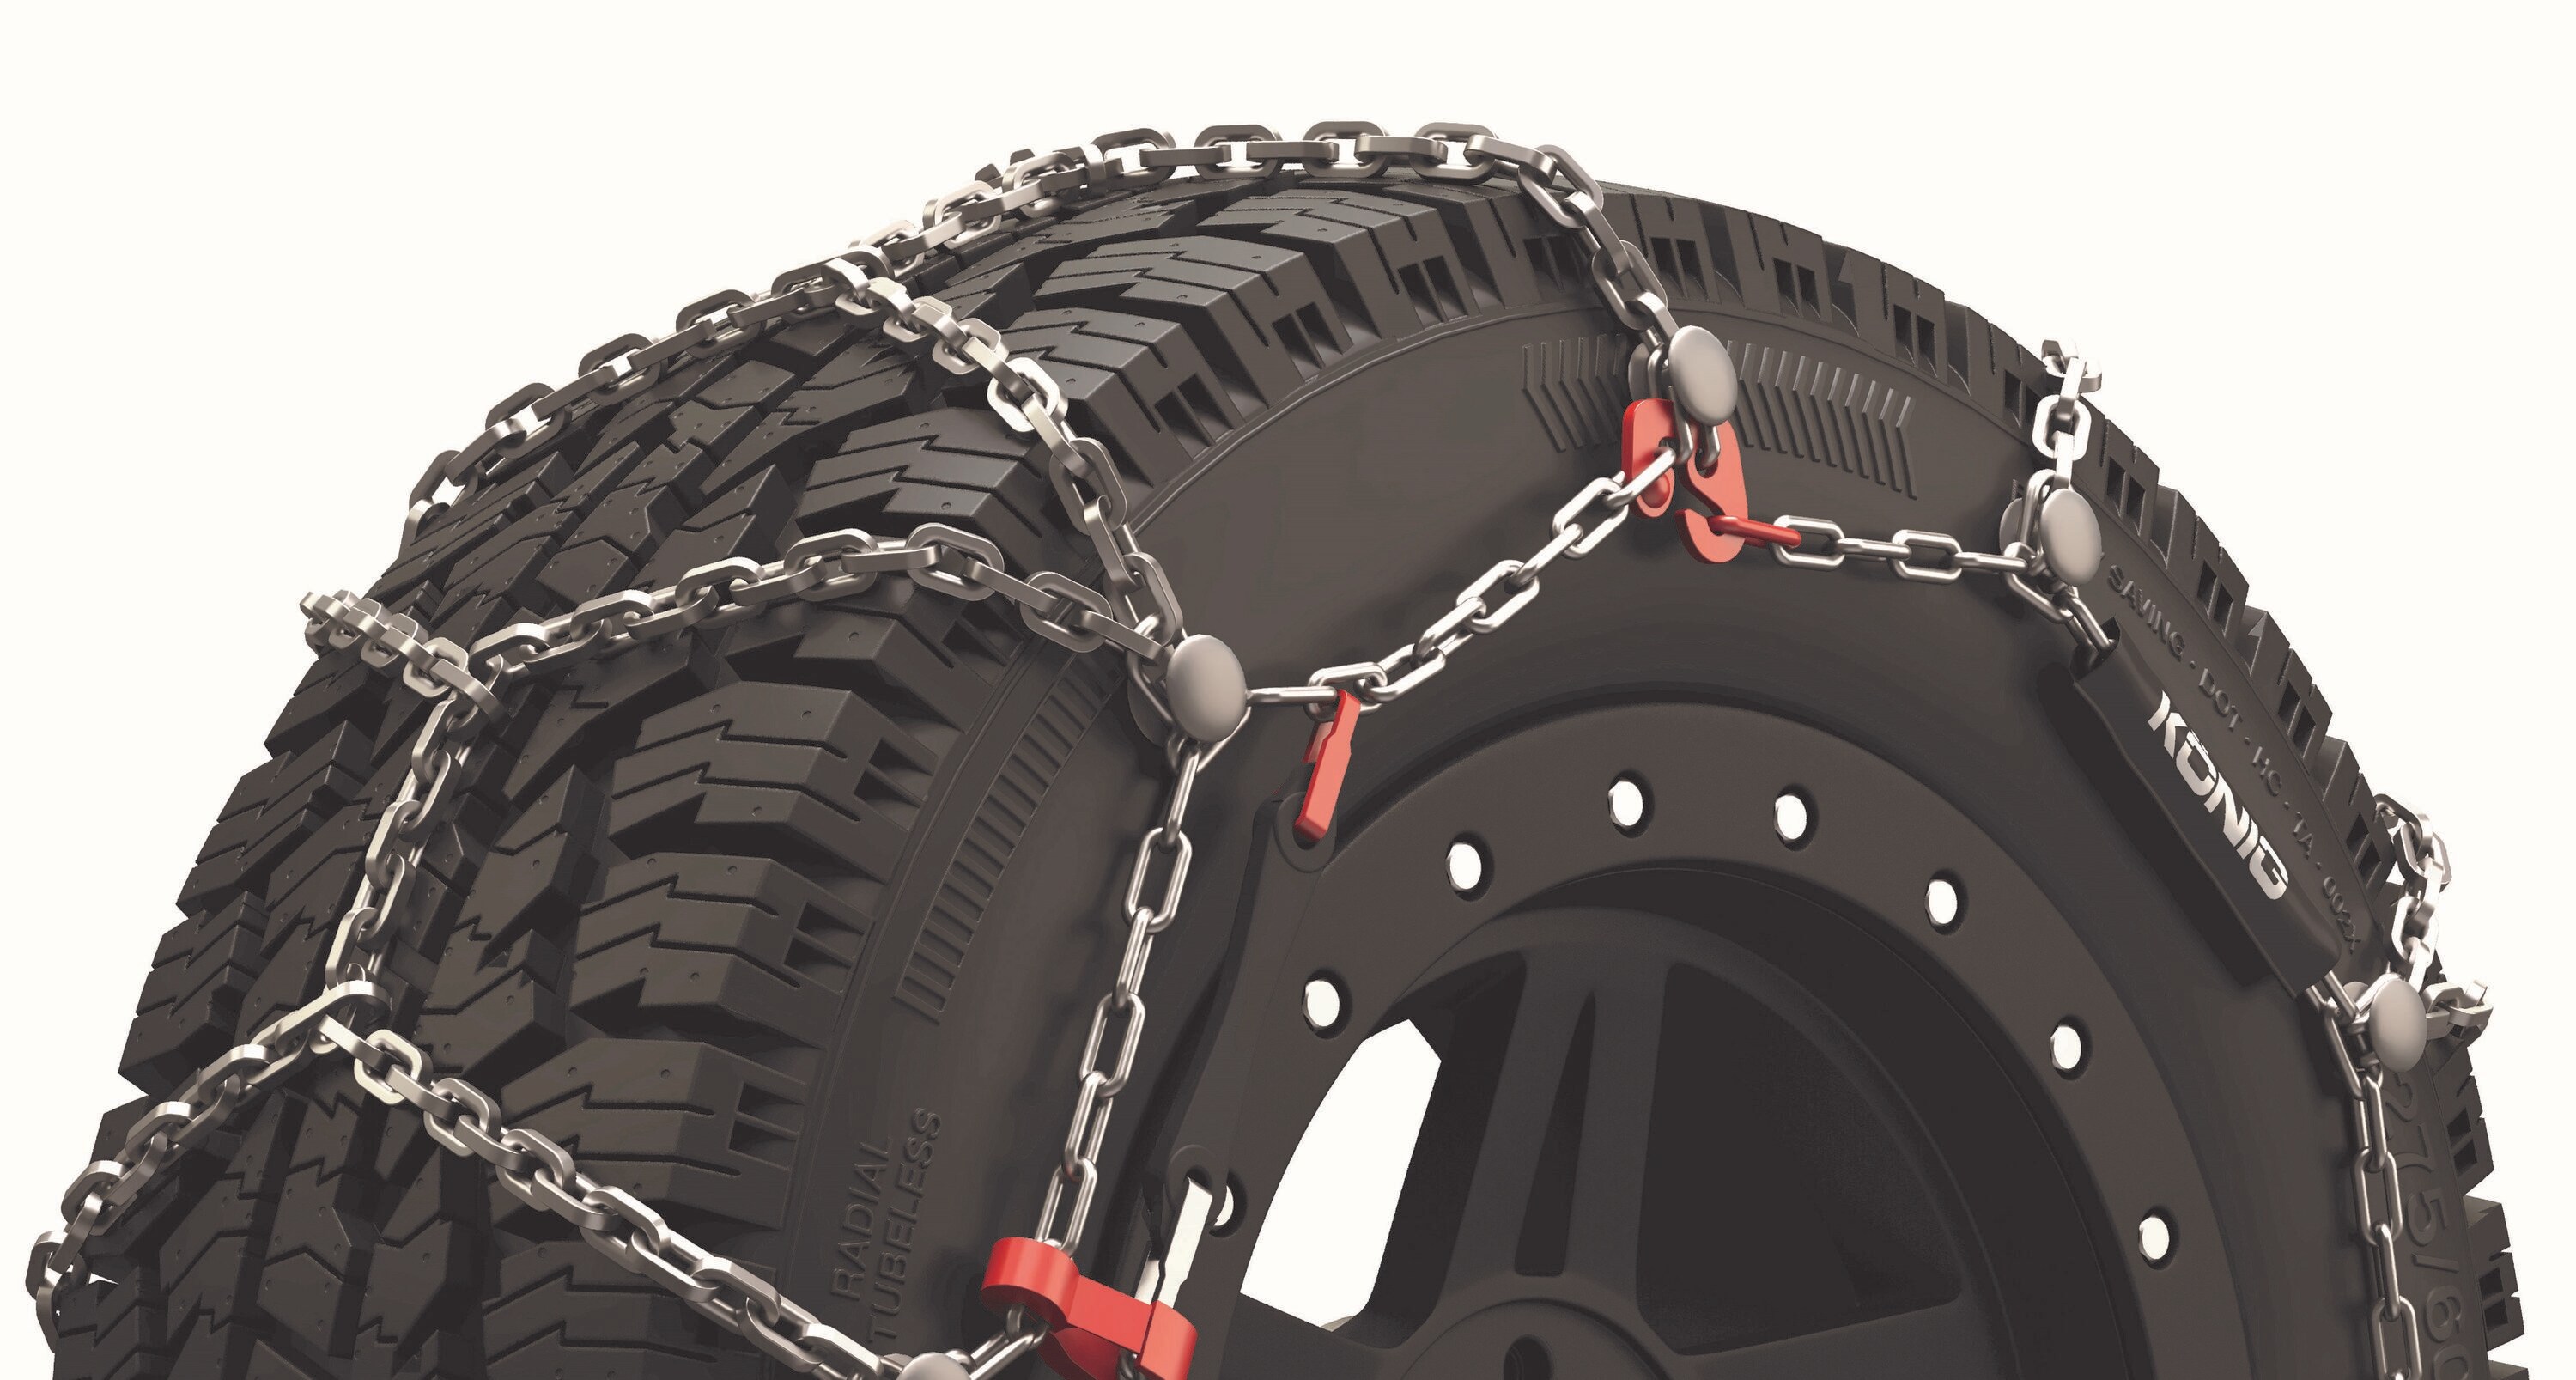 Konig Heavy Duty Steel Tire Chains for SUVs, Trucks, and Vans 